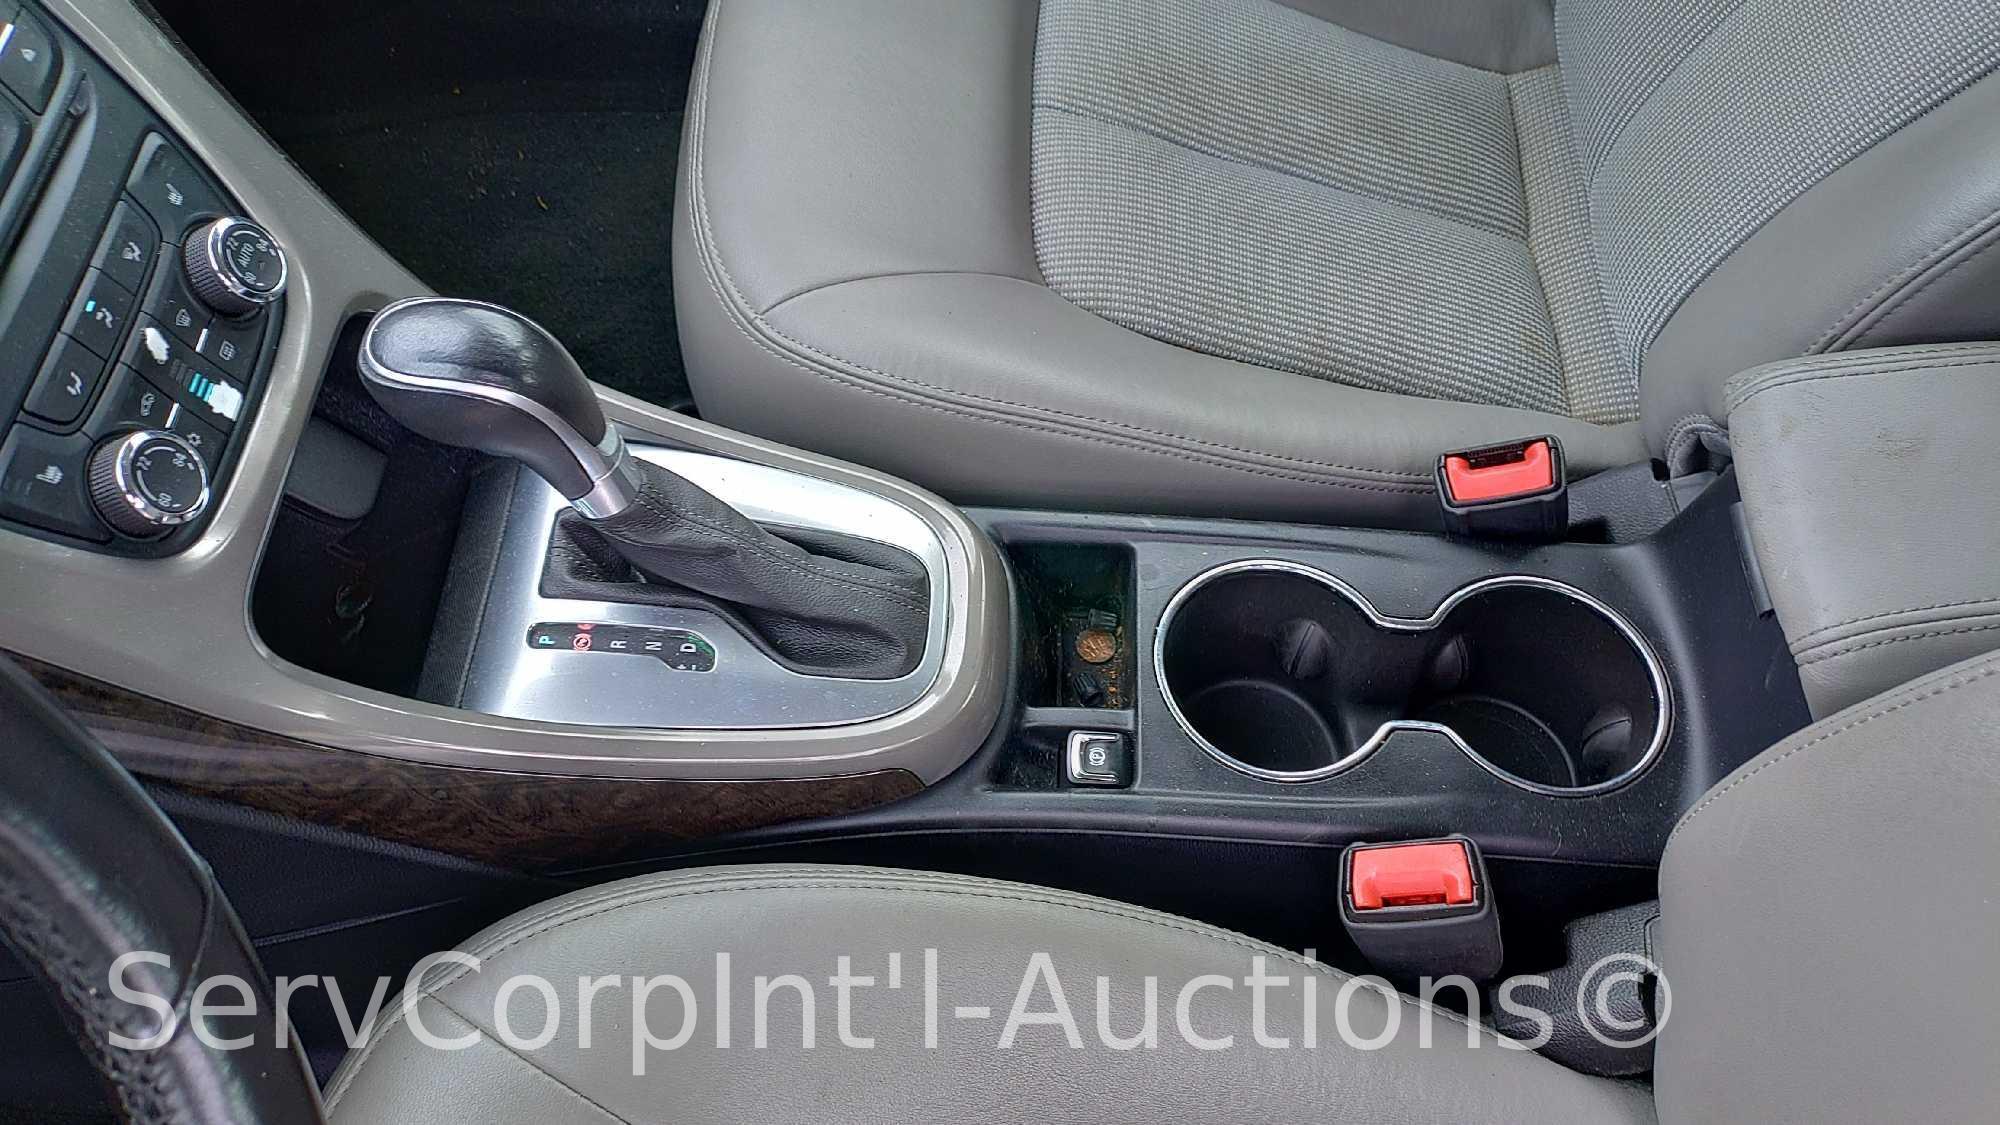 2014 Buick Verano Passenger Car, VIN # 1G4PR5SK6E4108117